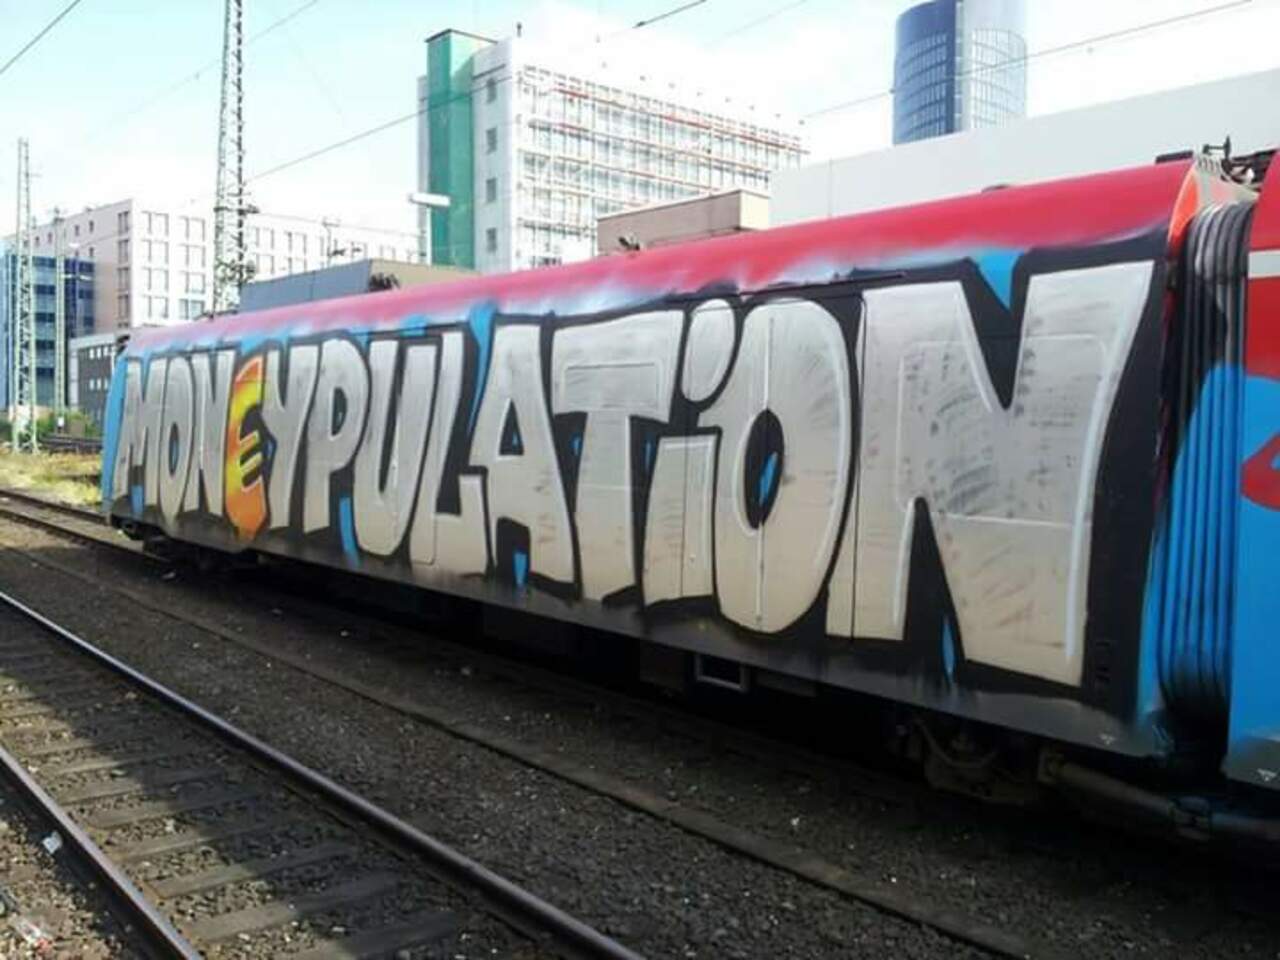 RT Abbiad86: "MON€YPULATION"
#Graffiti #StreetArt https://t.co/7aGQl9rxw6 https://goo.gl/t4fpx2